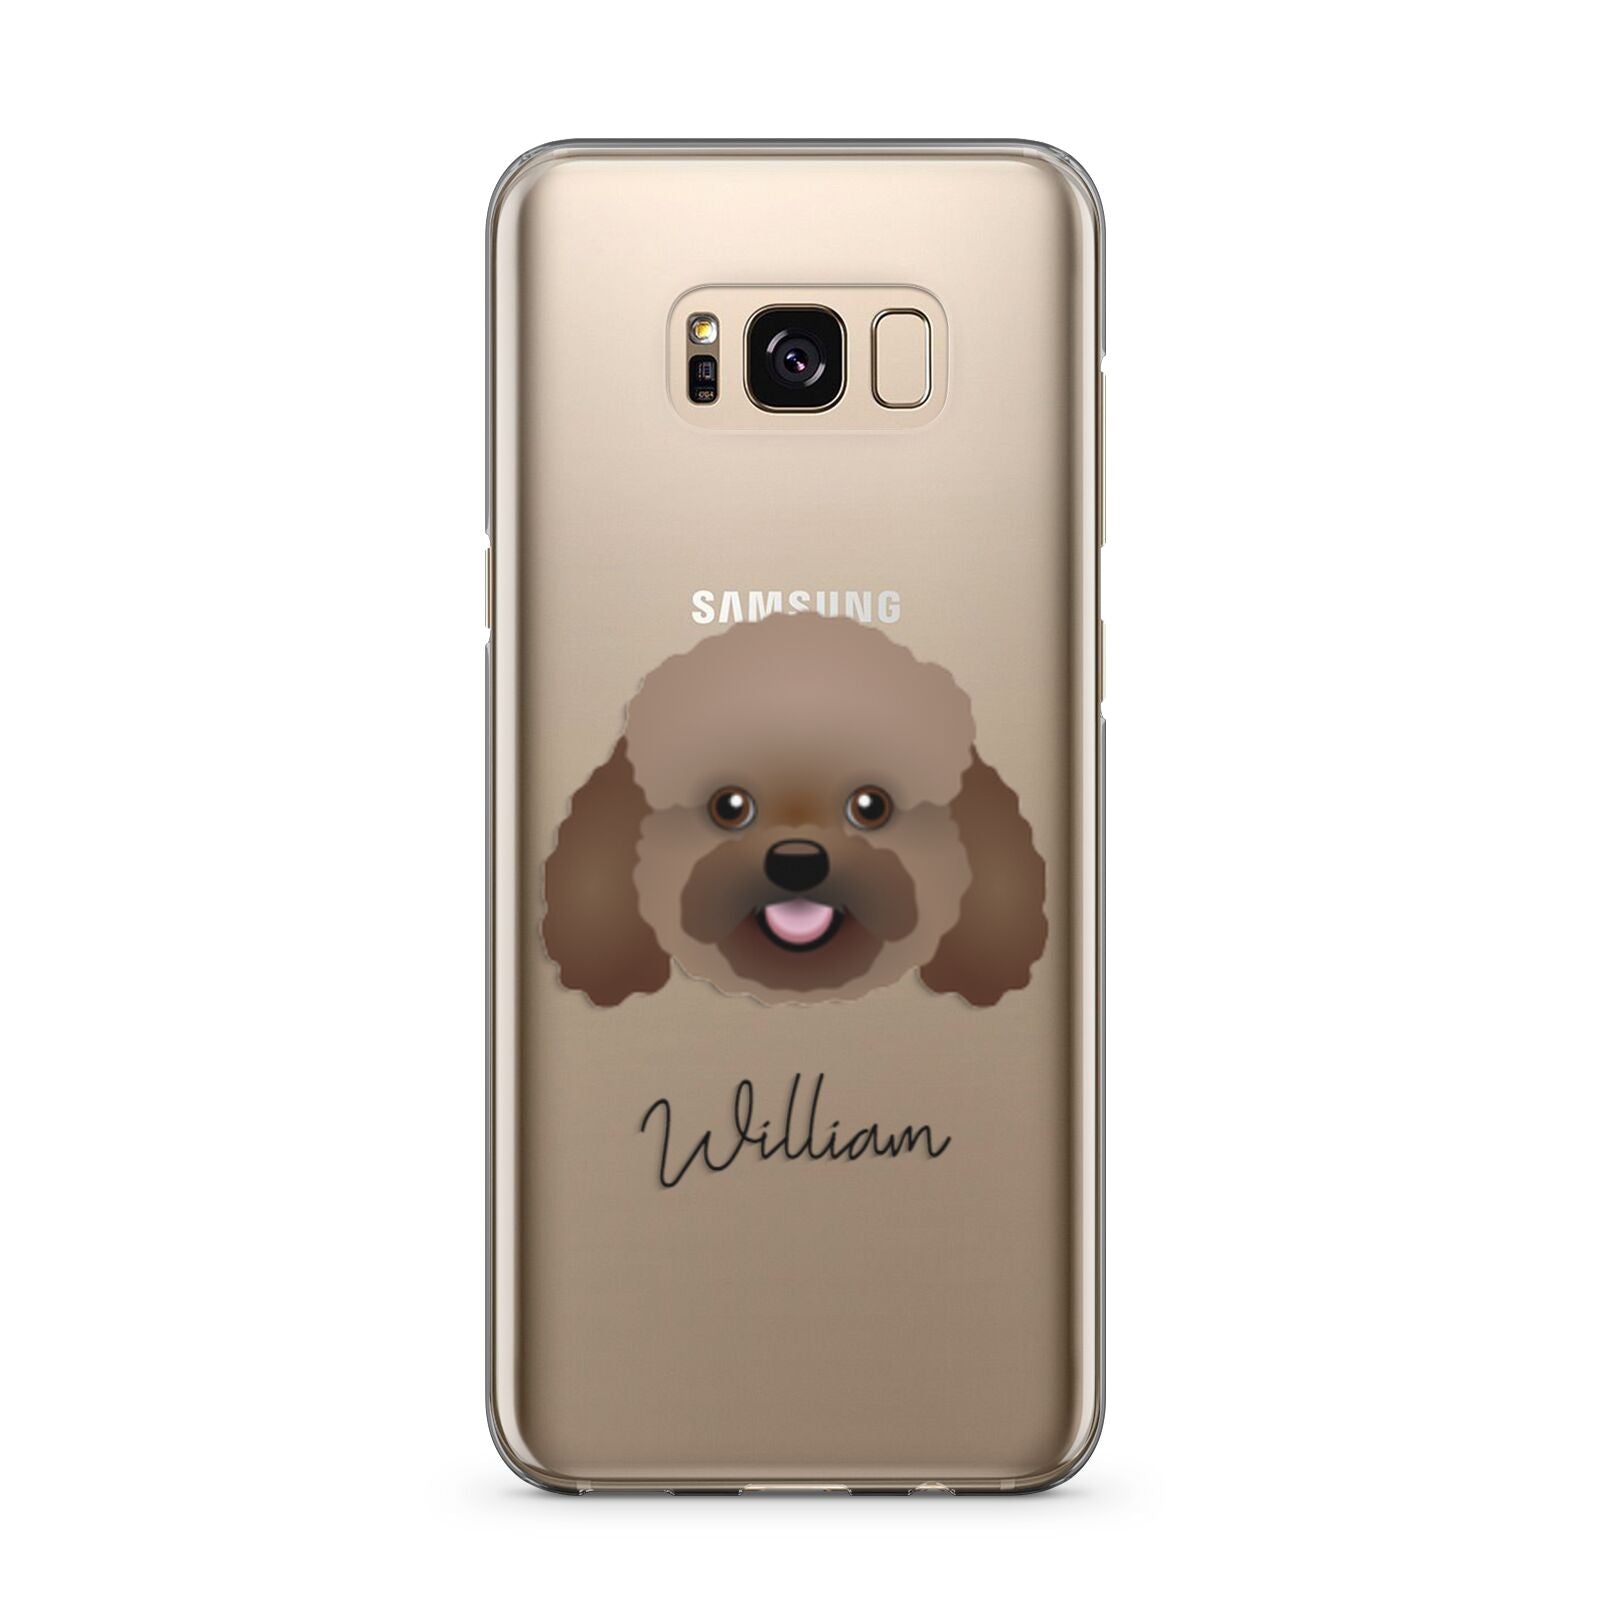 Bich poo Personalised Samsung Galaxy S8 Plus Case